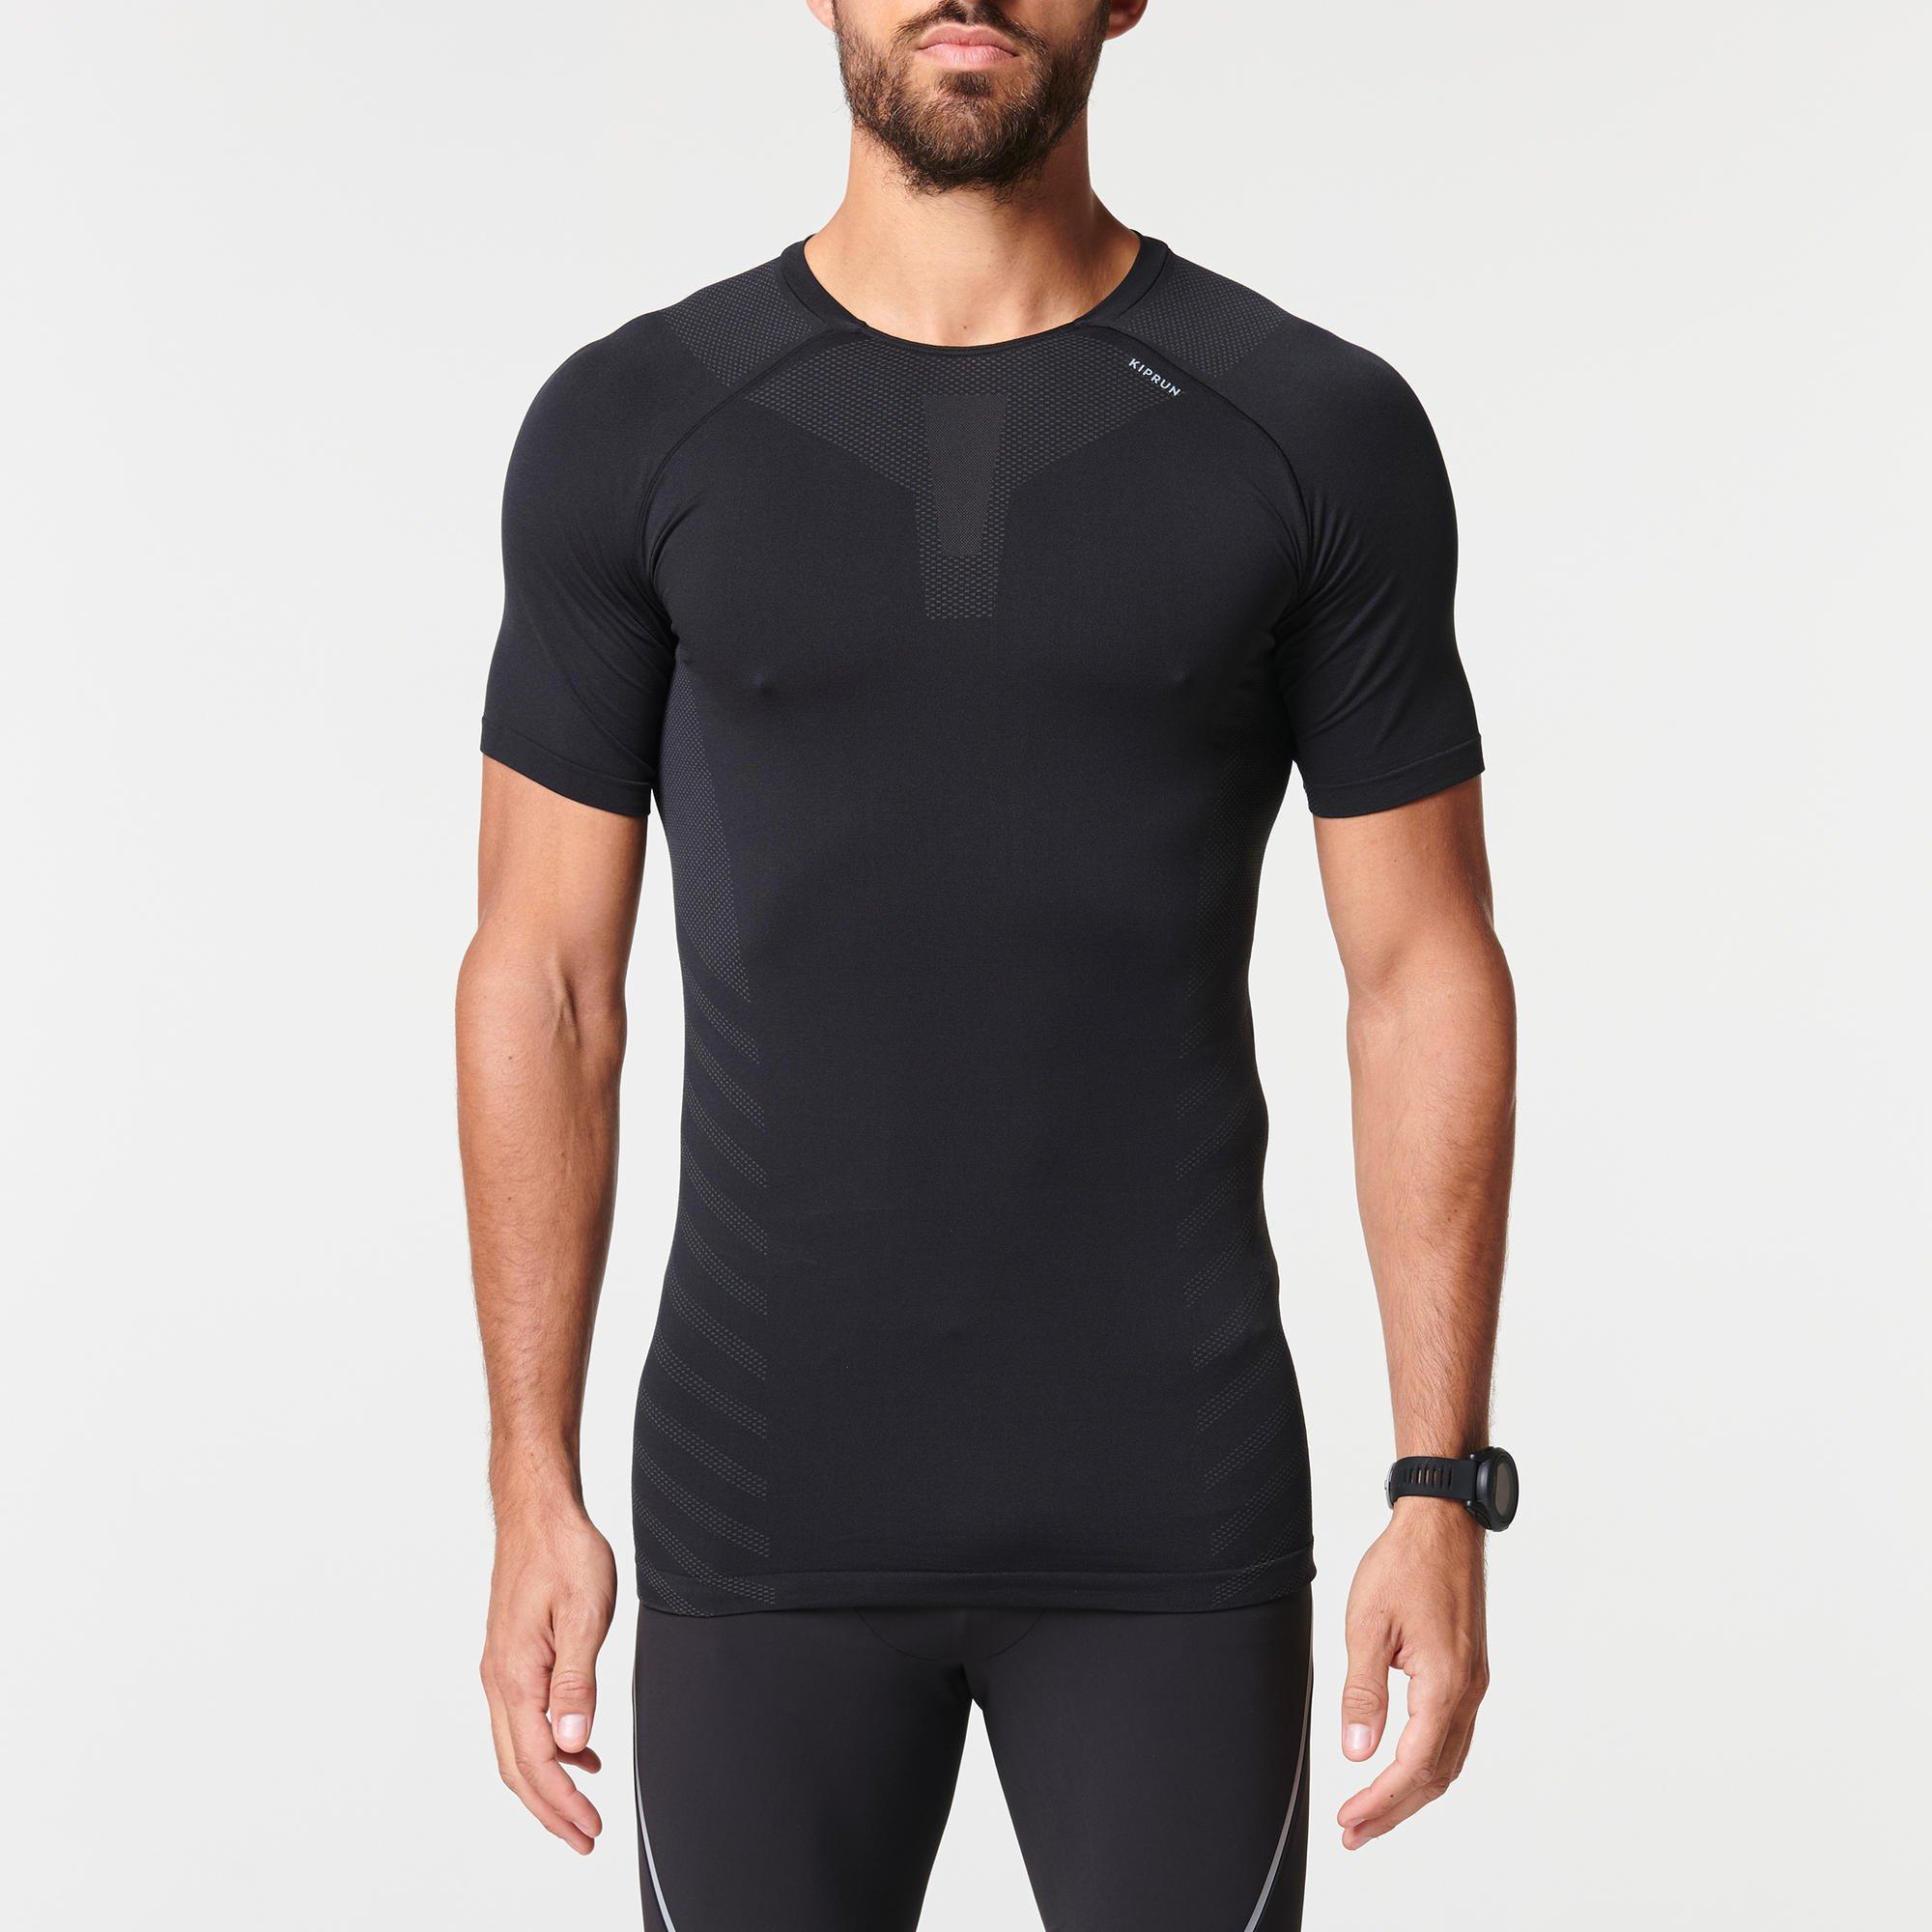 Дышащая футболка для бега Decathlon Kiprun Skincare, черный